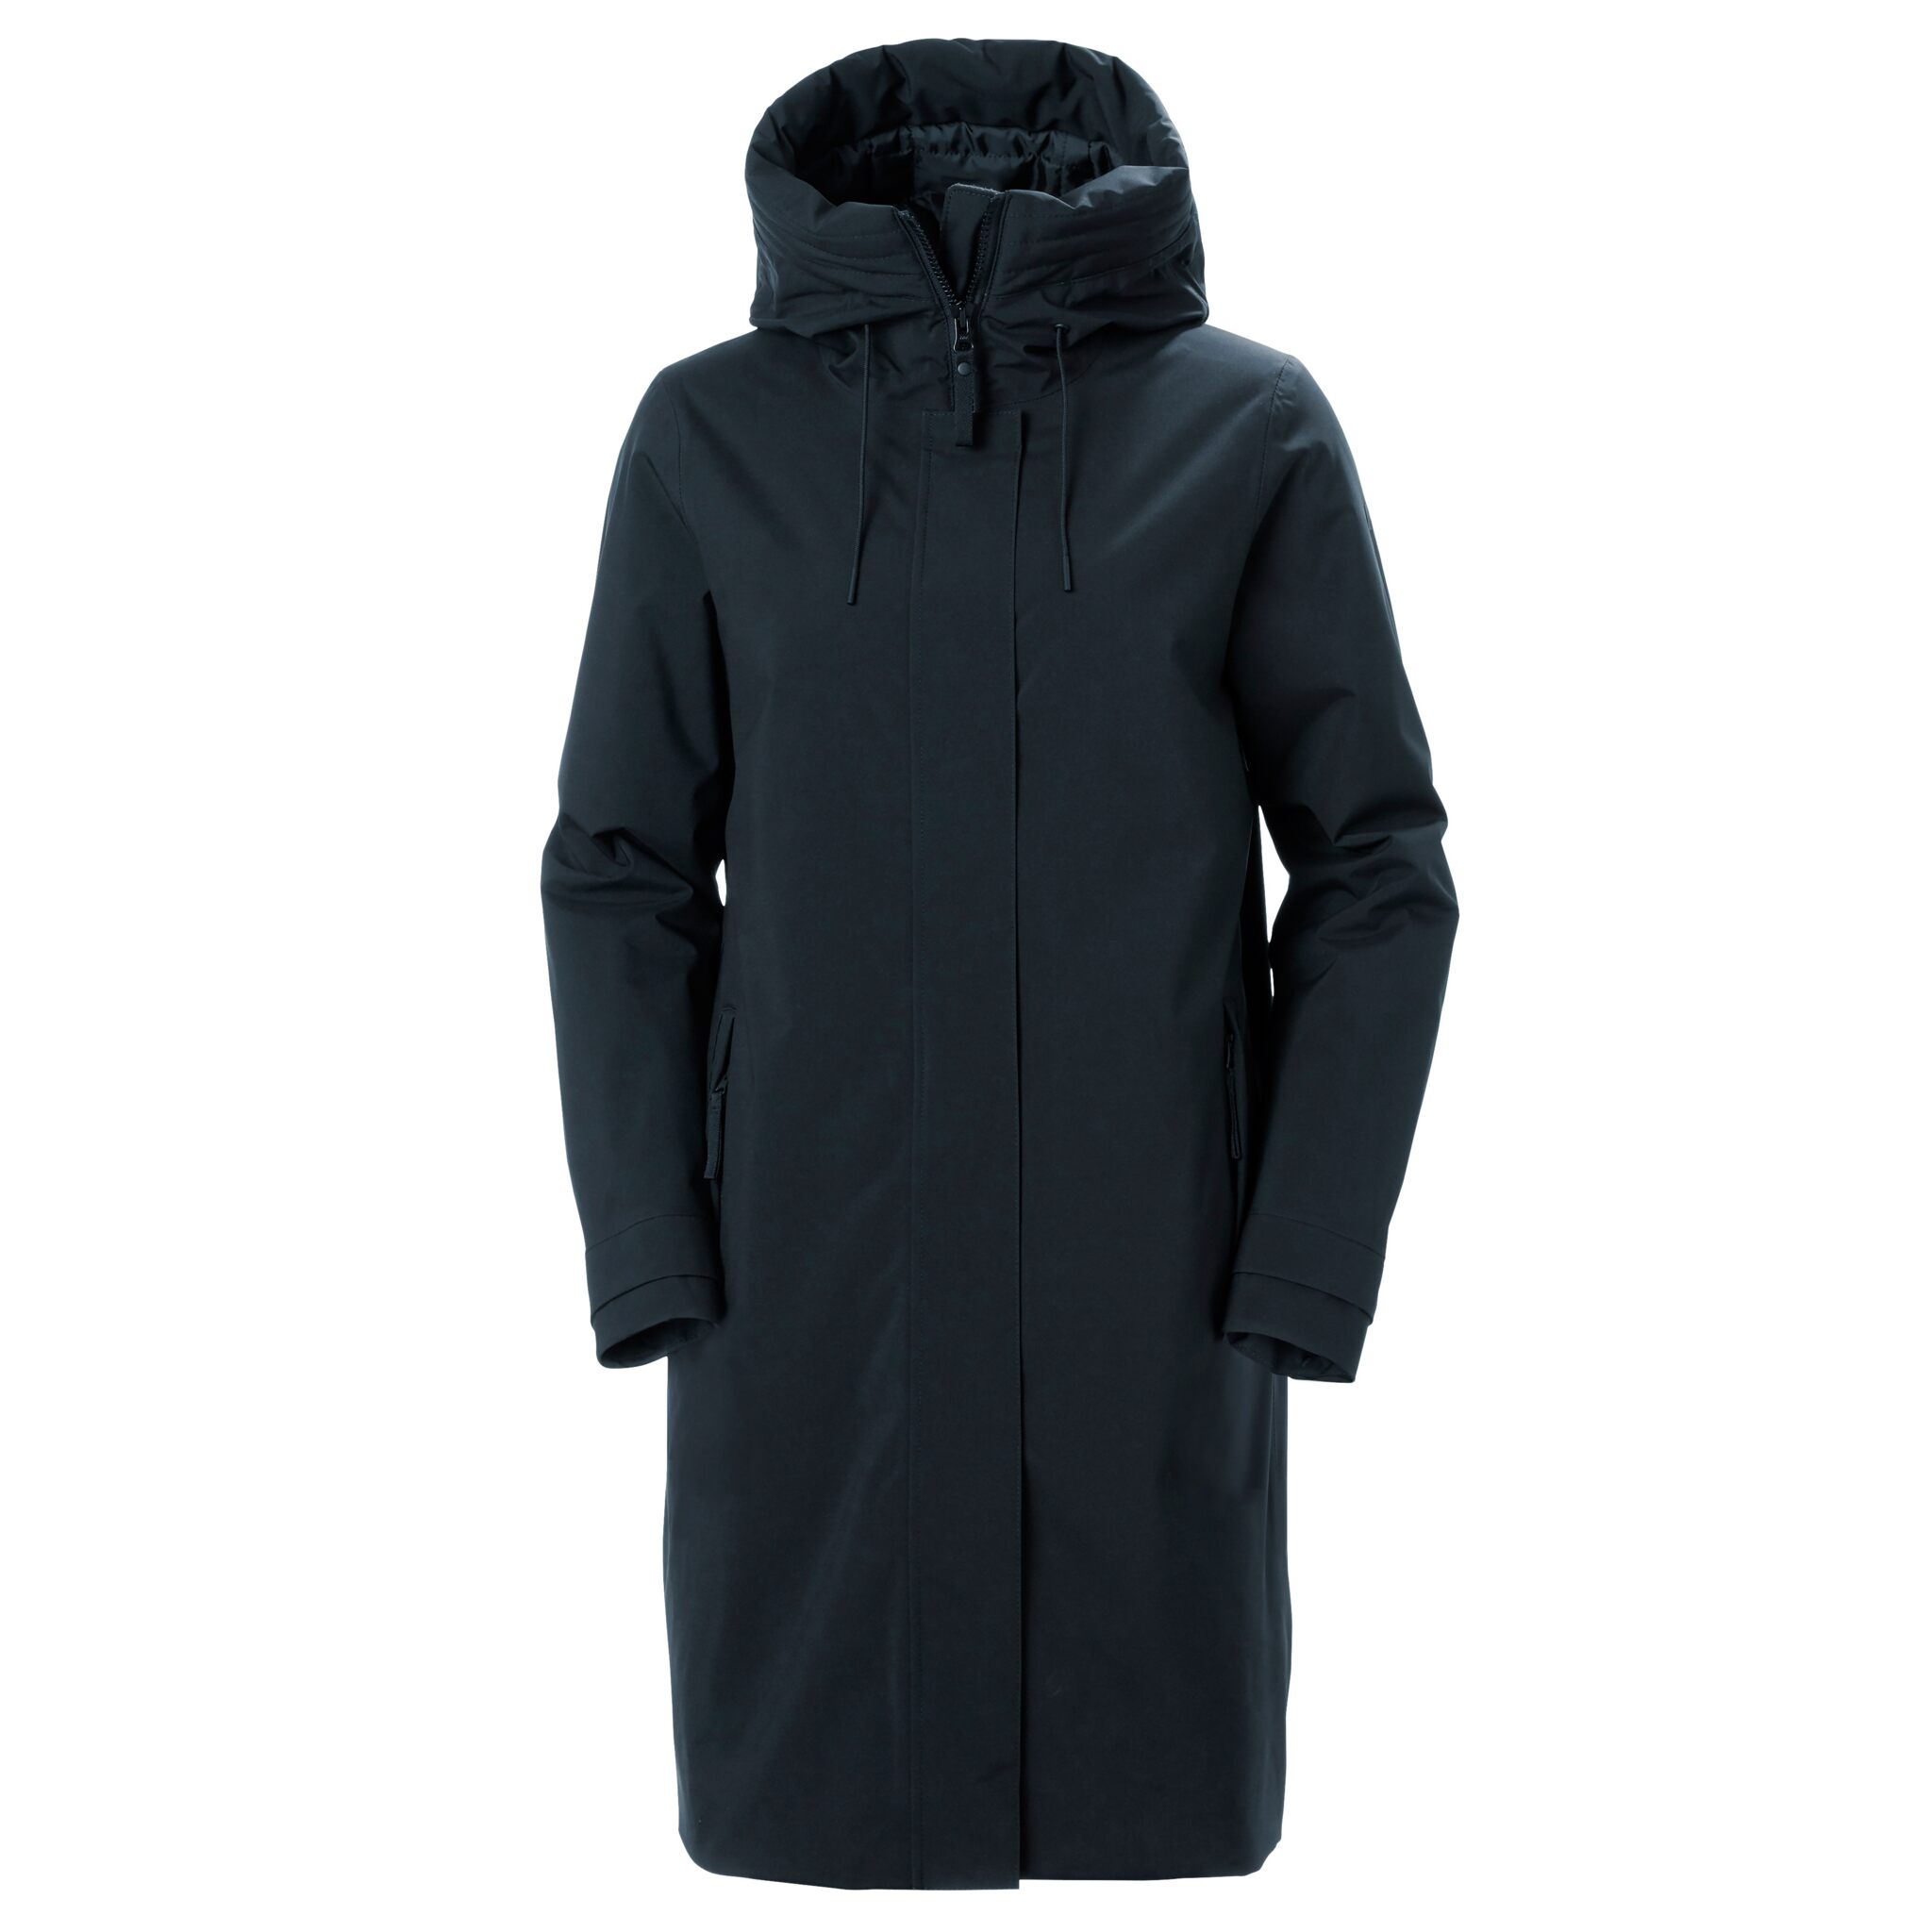 Victoria raincoat for ladies - navy